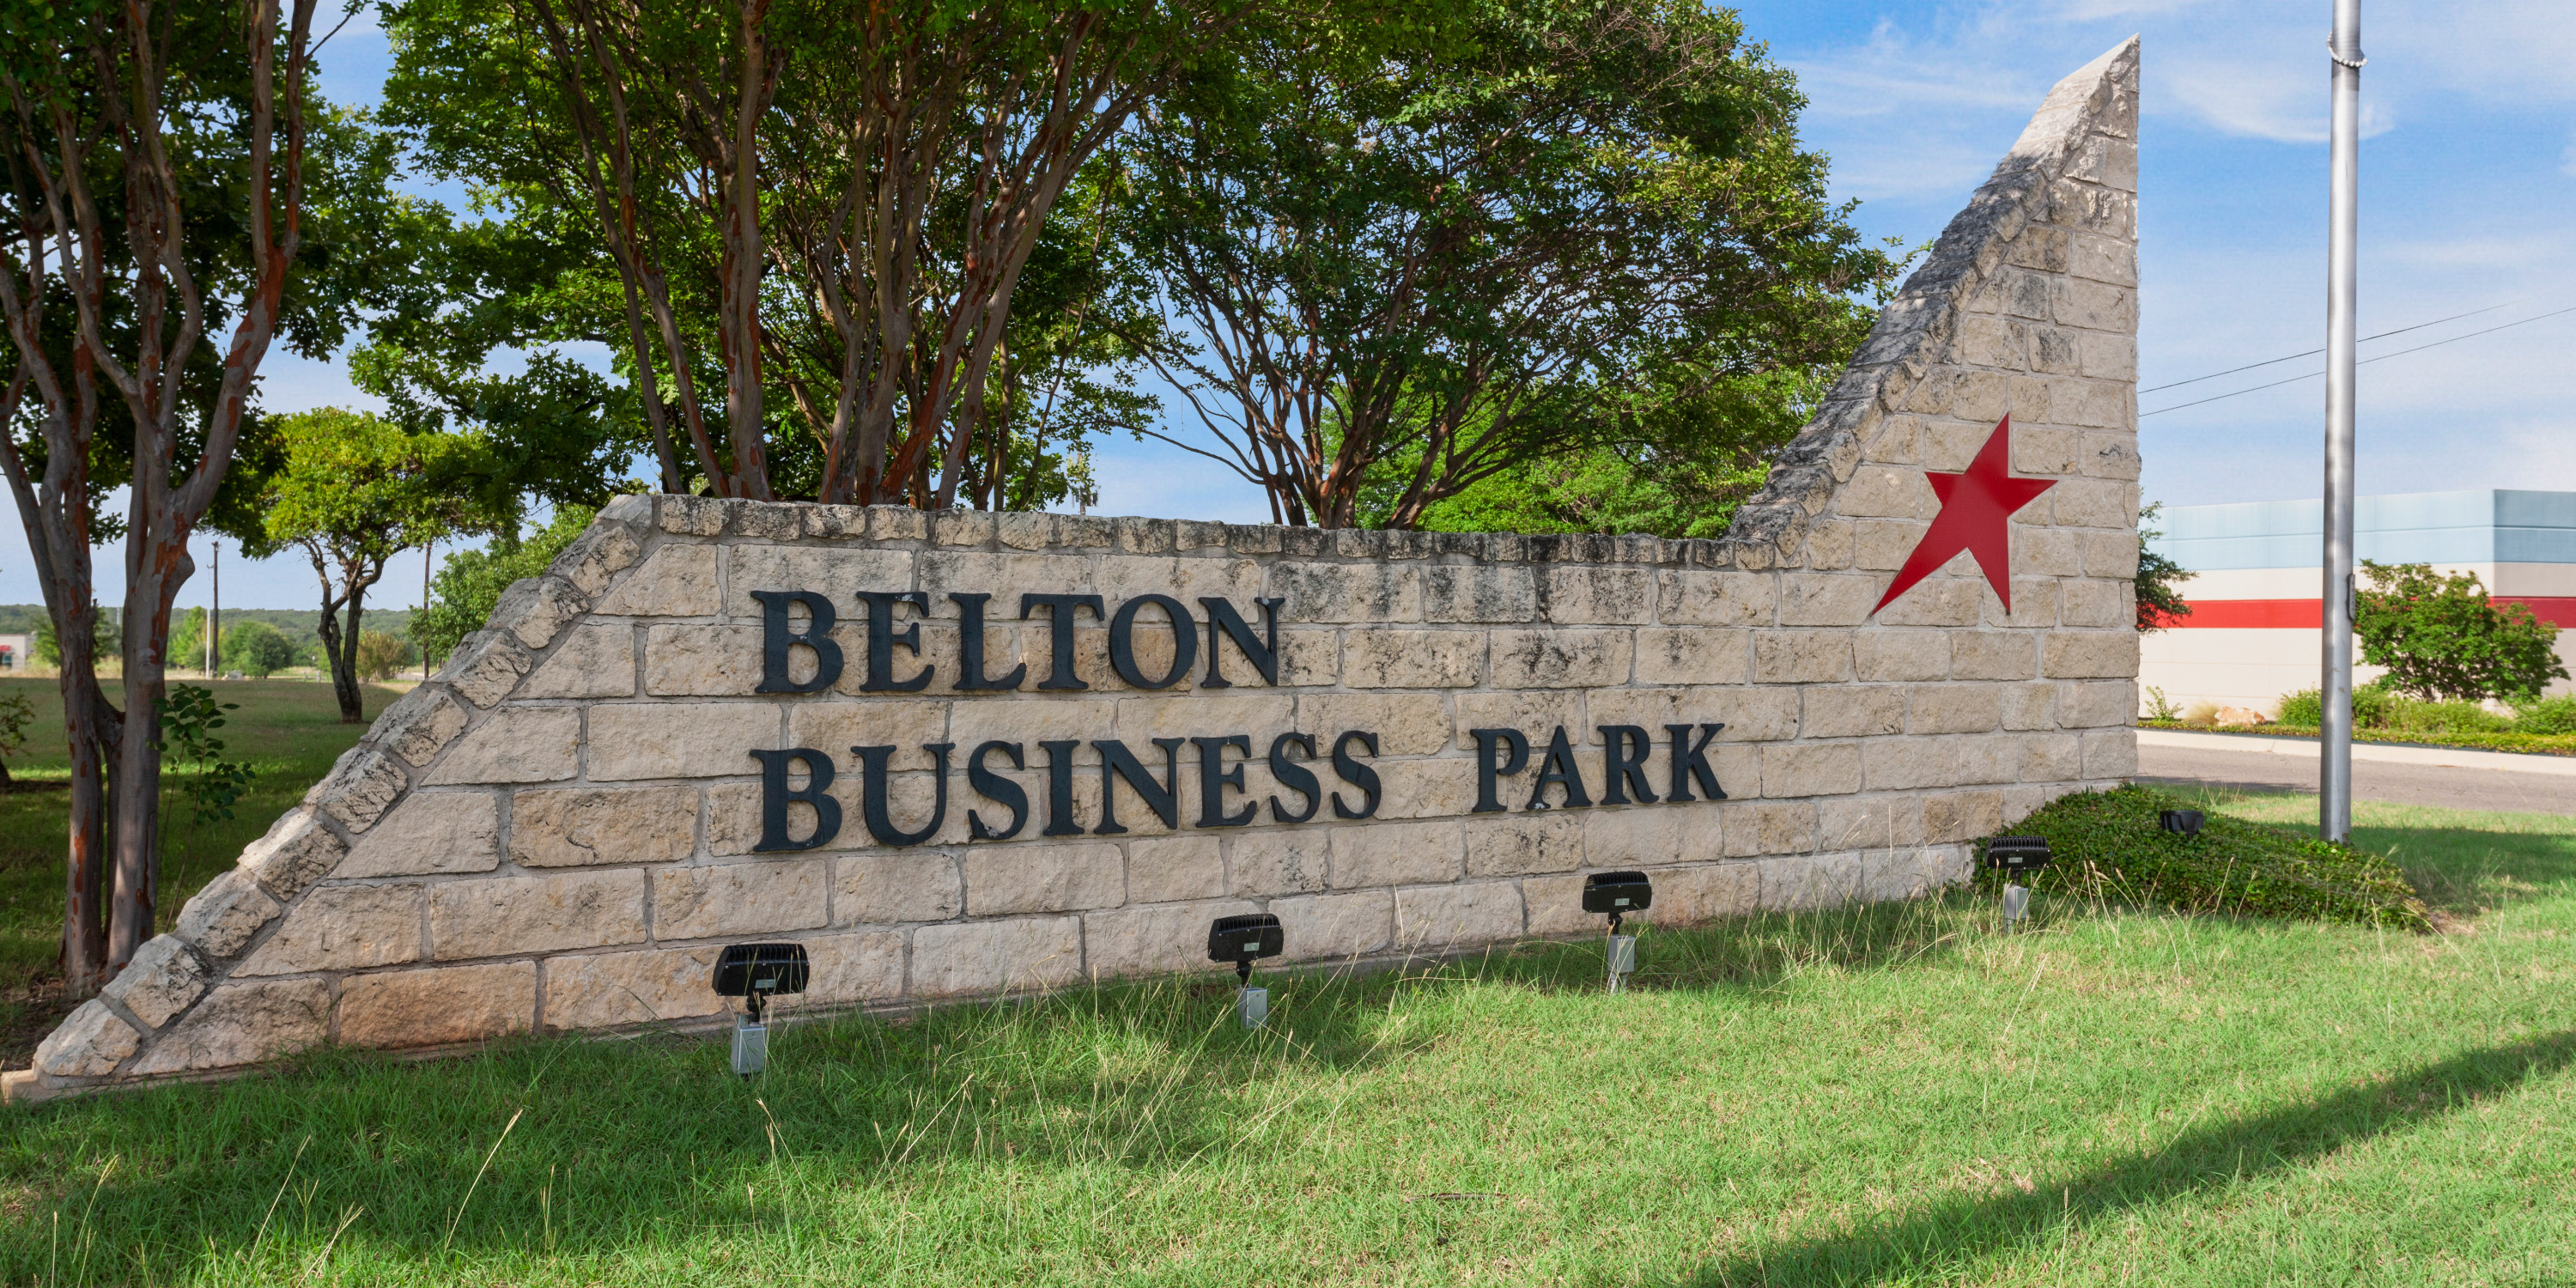 Belton Business Park stone sign